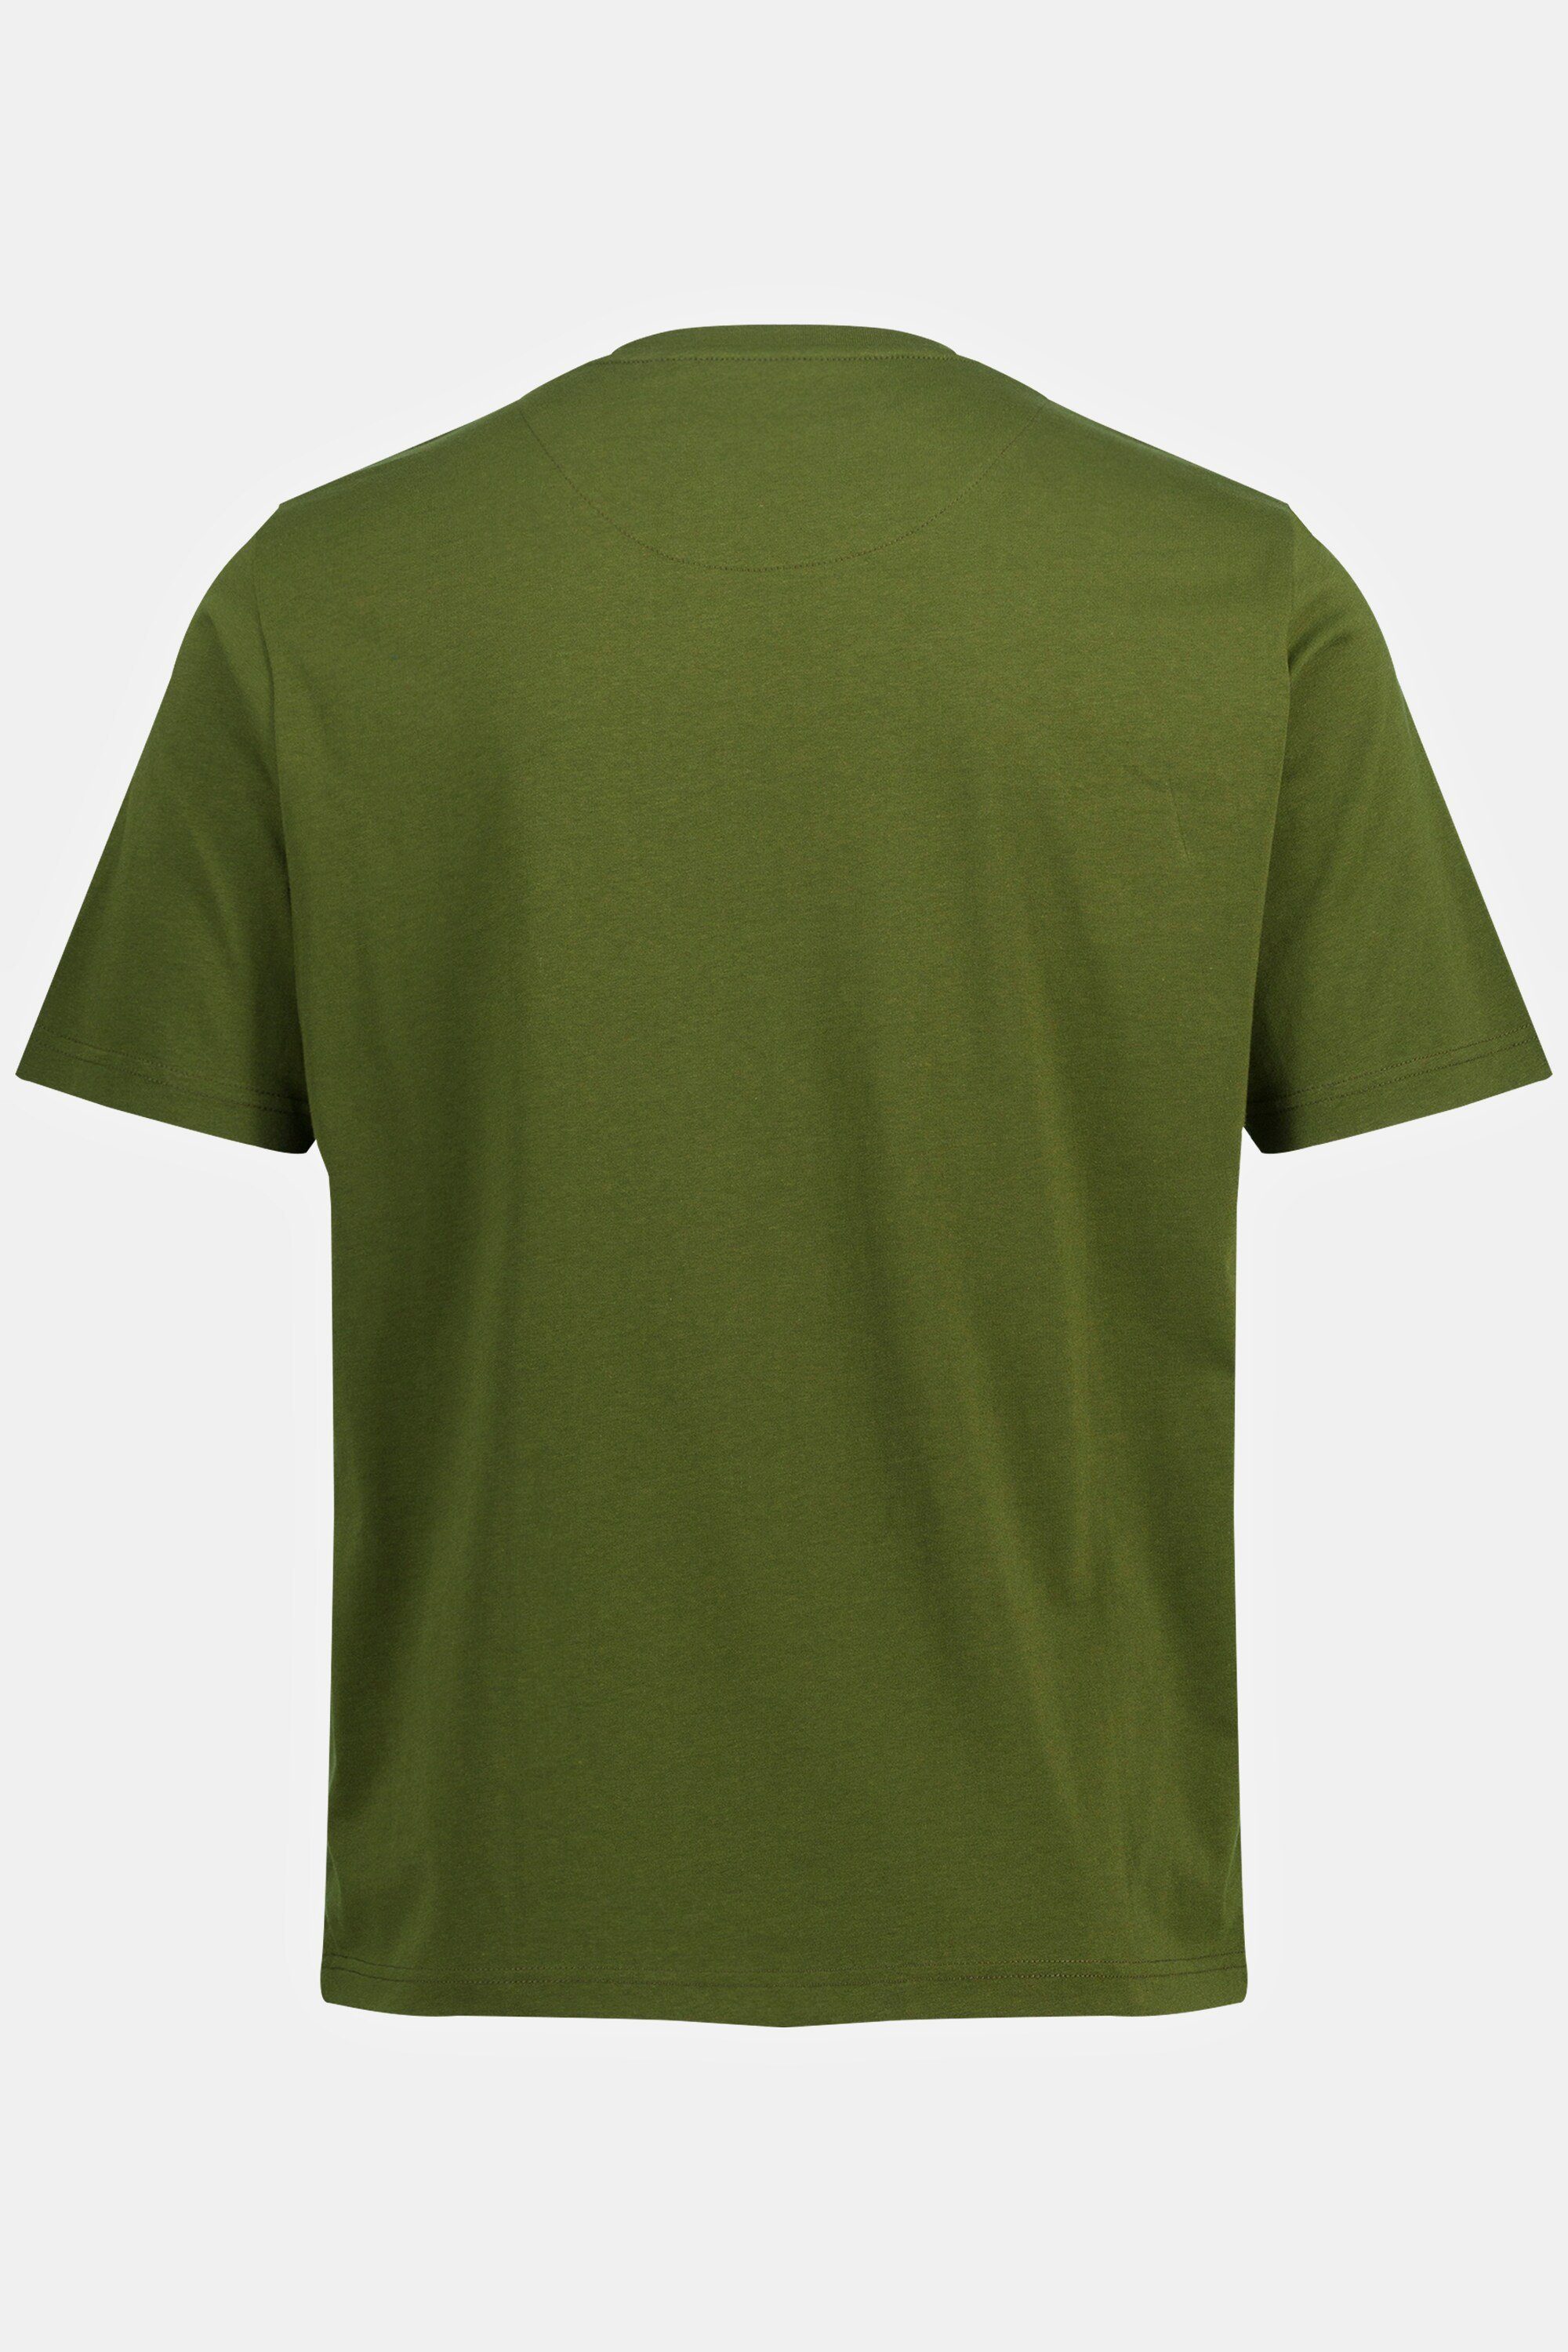 T-Shirt Funktions-T-Shirt Outdoor JP1880 Halbarm Rundhals